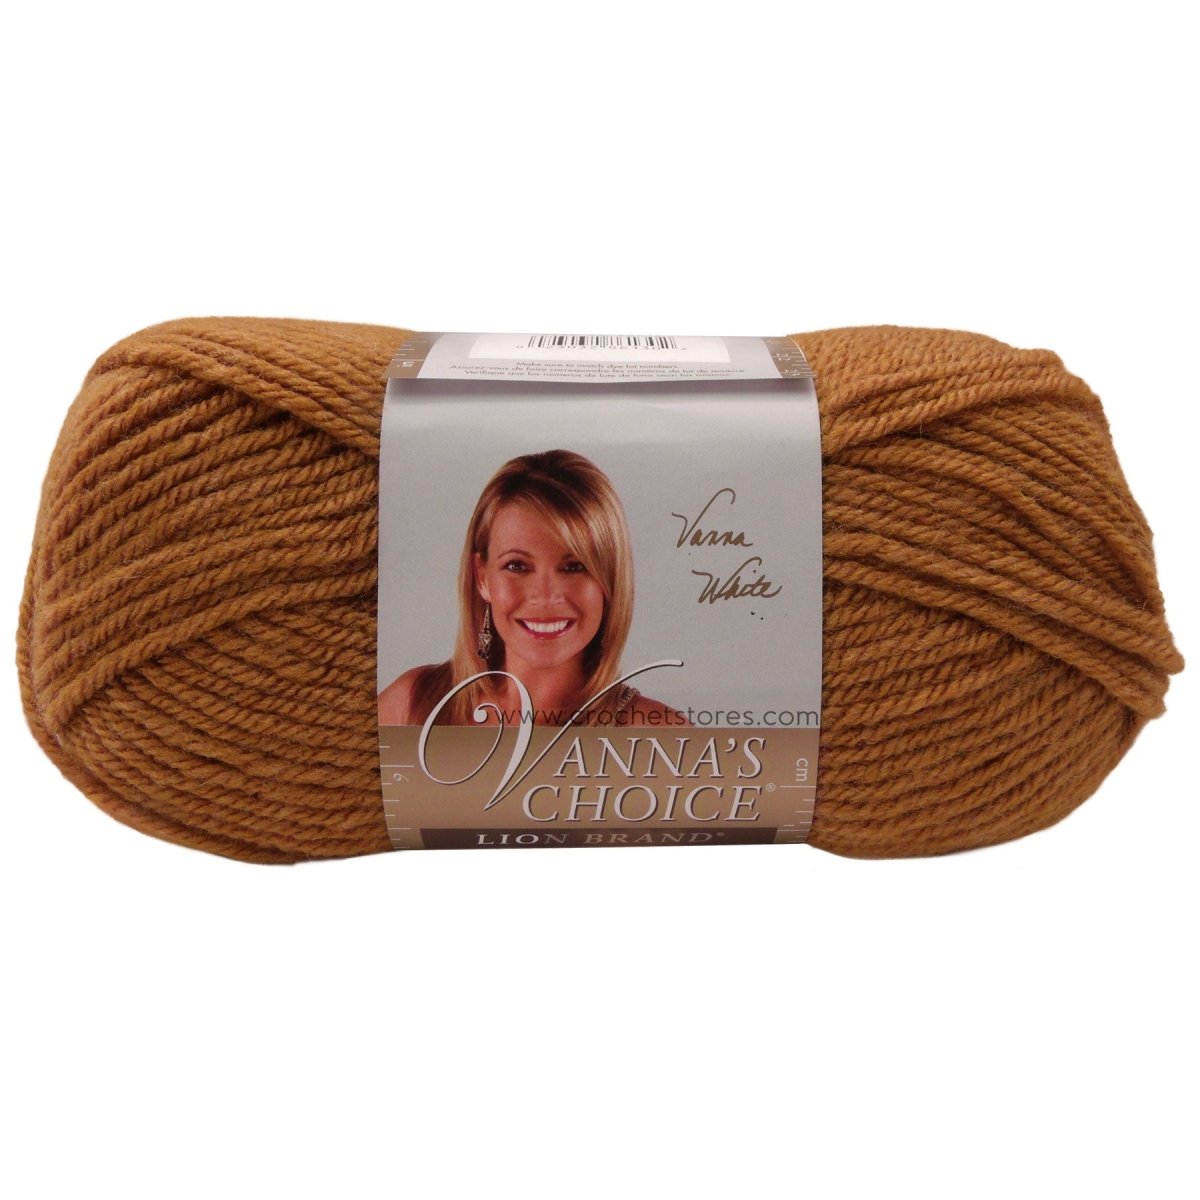 VANNAS CHOICE - Crochetstores860-130